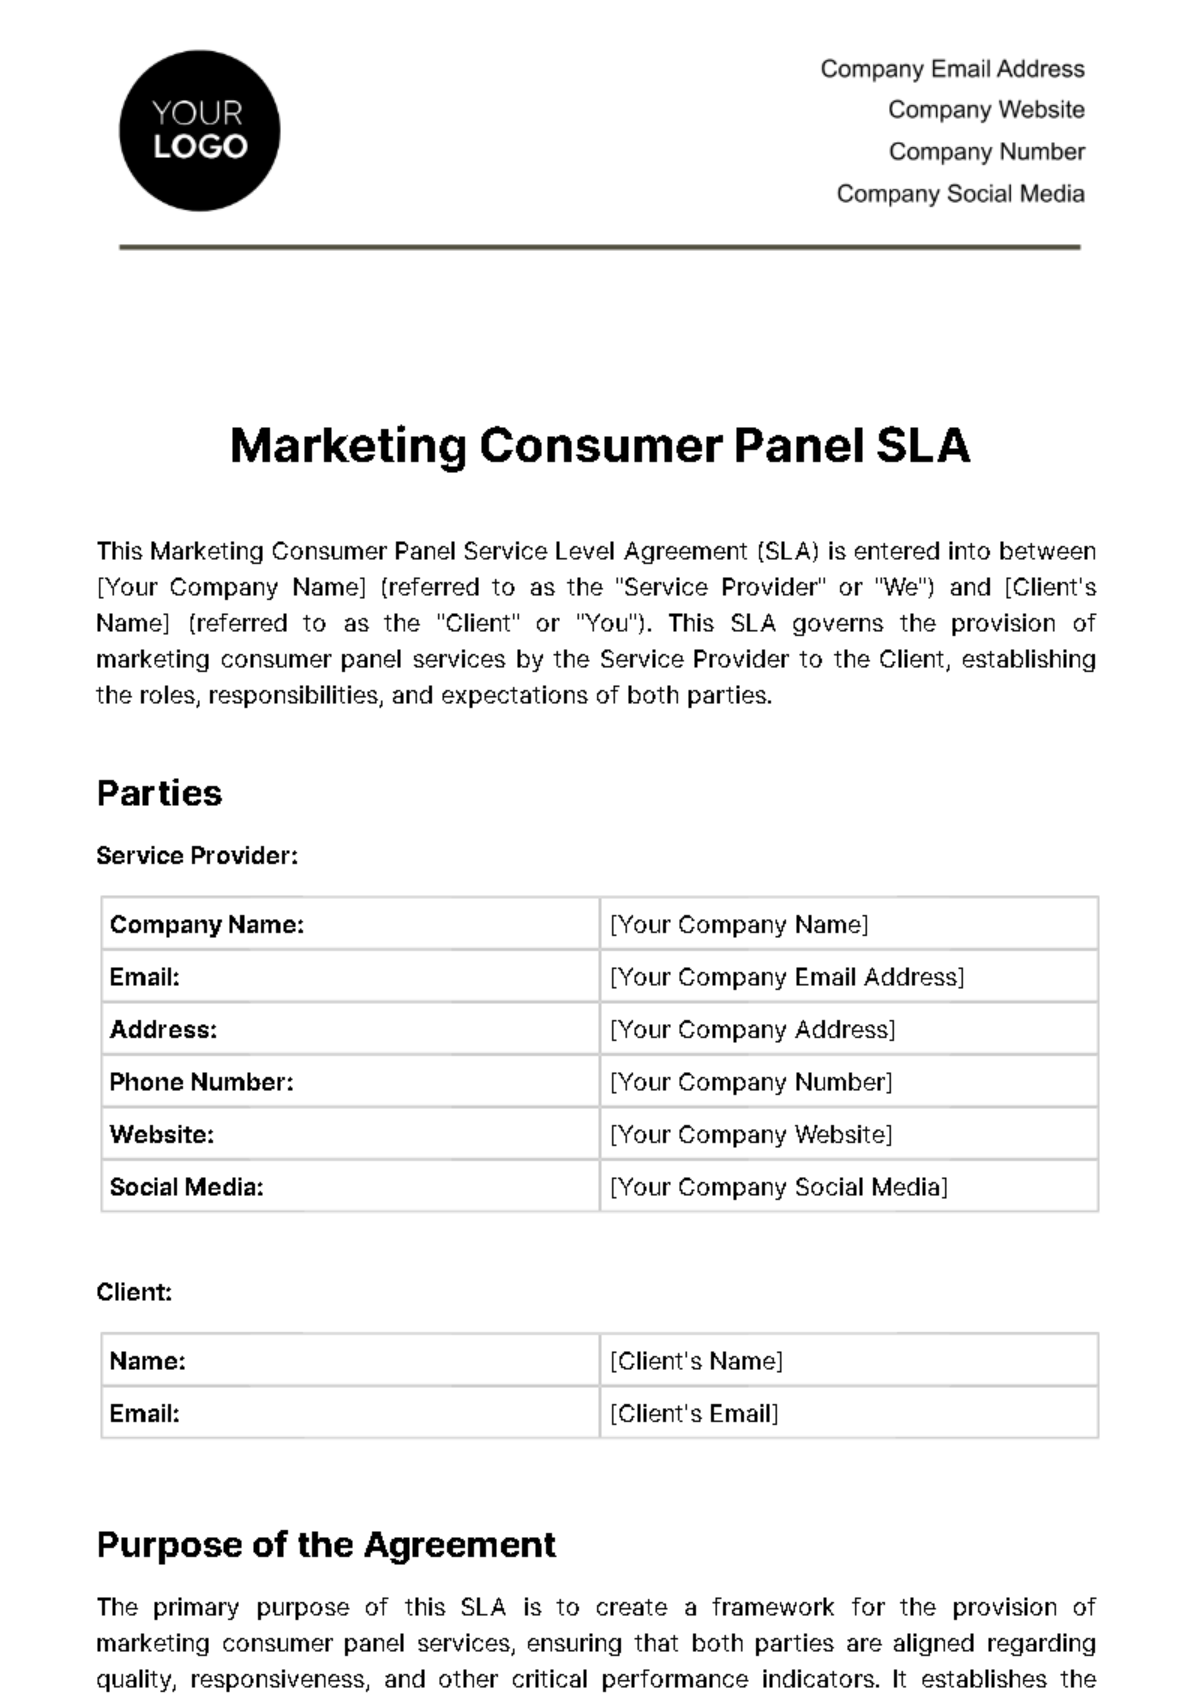 Marketing Consumer Panel SLA Template